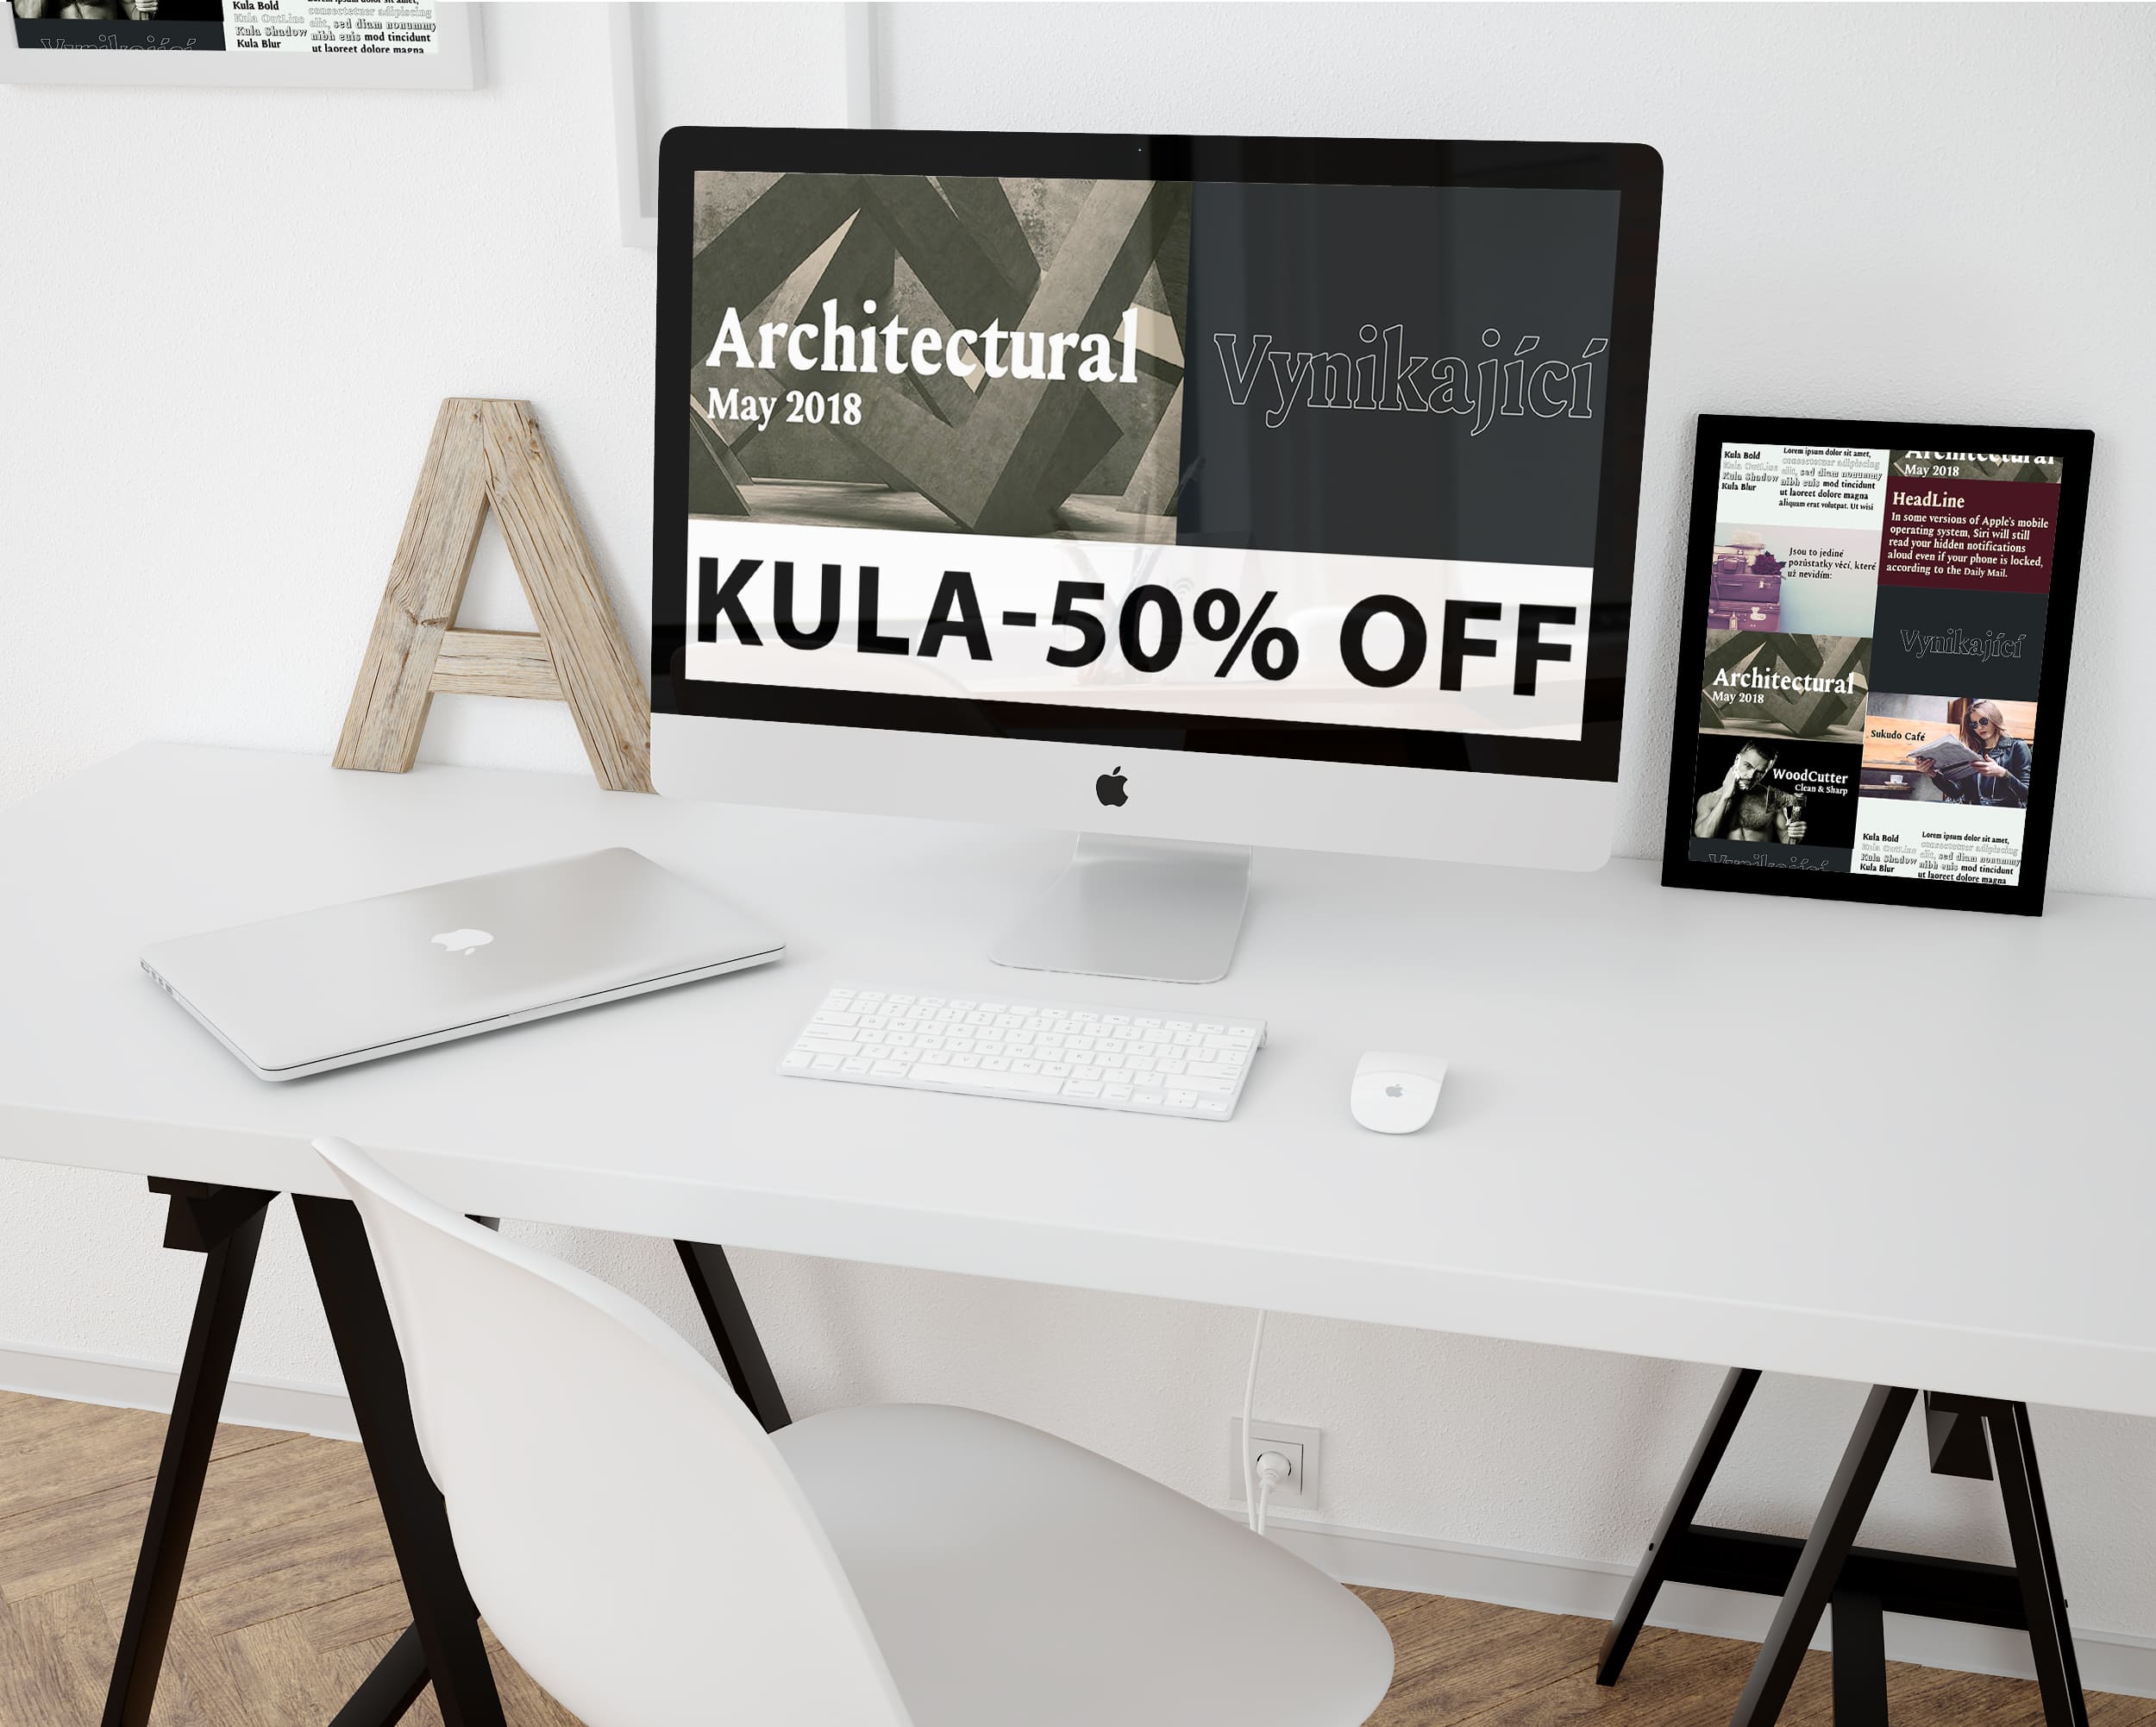 Desktop option of the Kula-50% off.